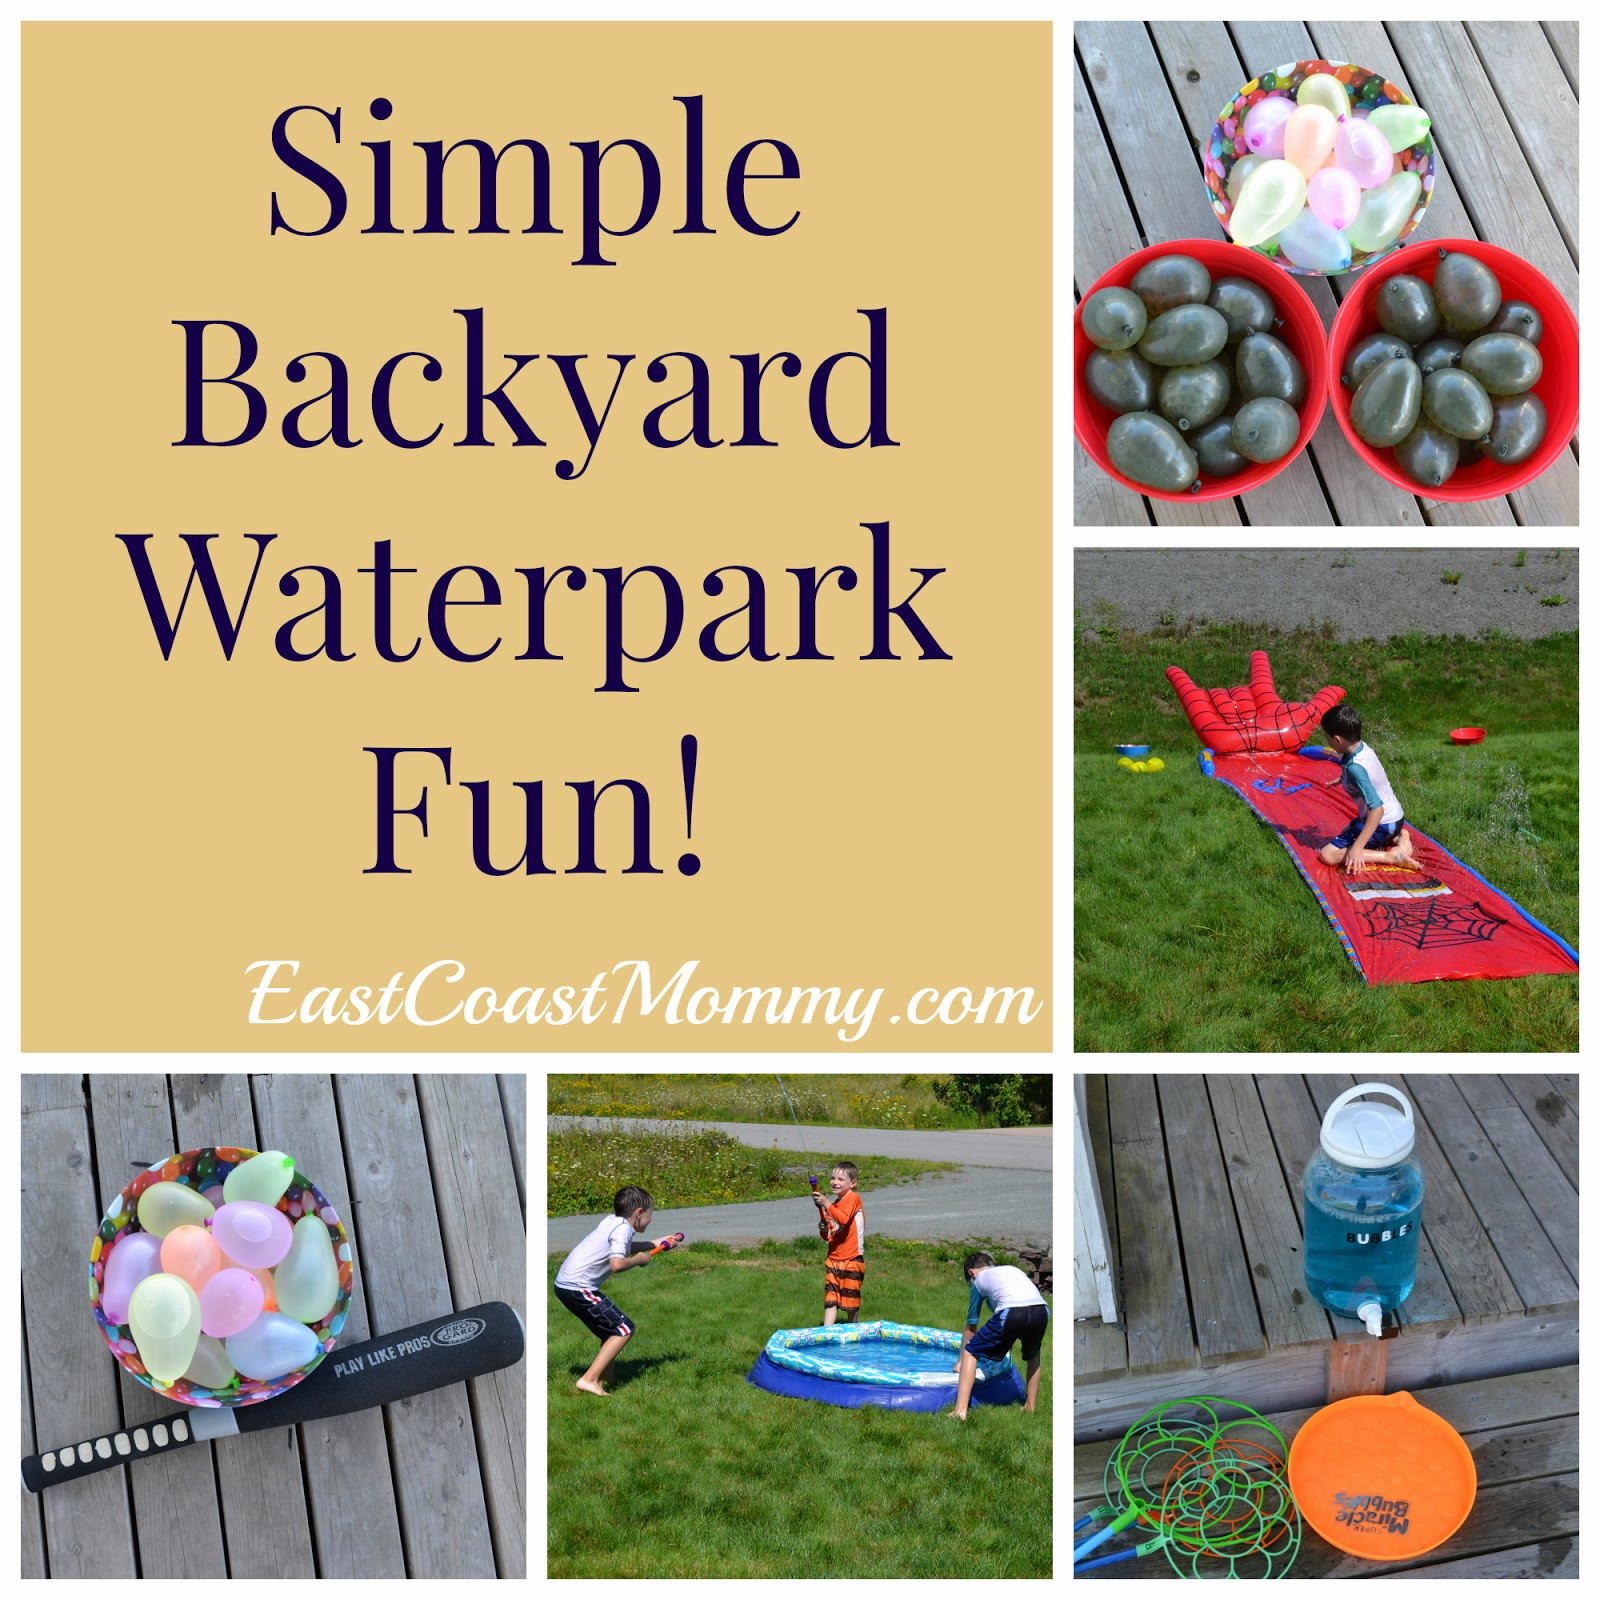 Backyard Water Park Party Ideas
 East Coast Mommy Simple Backyard Water Park